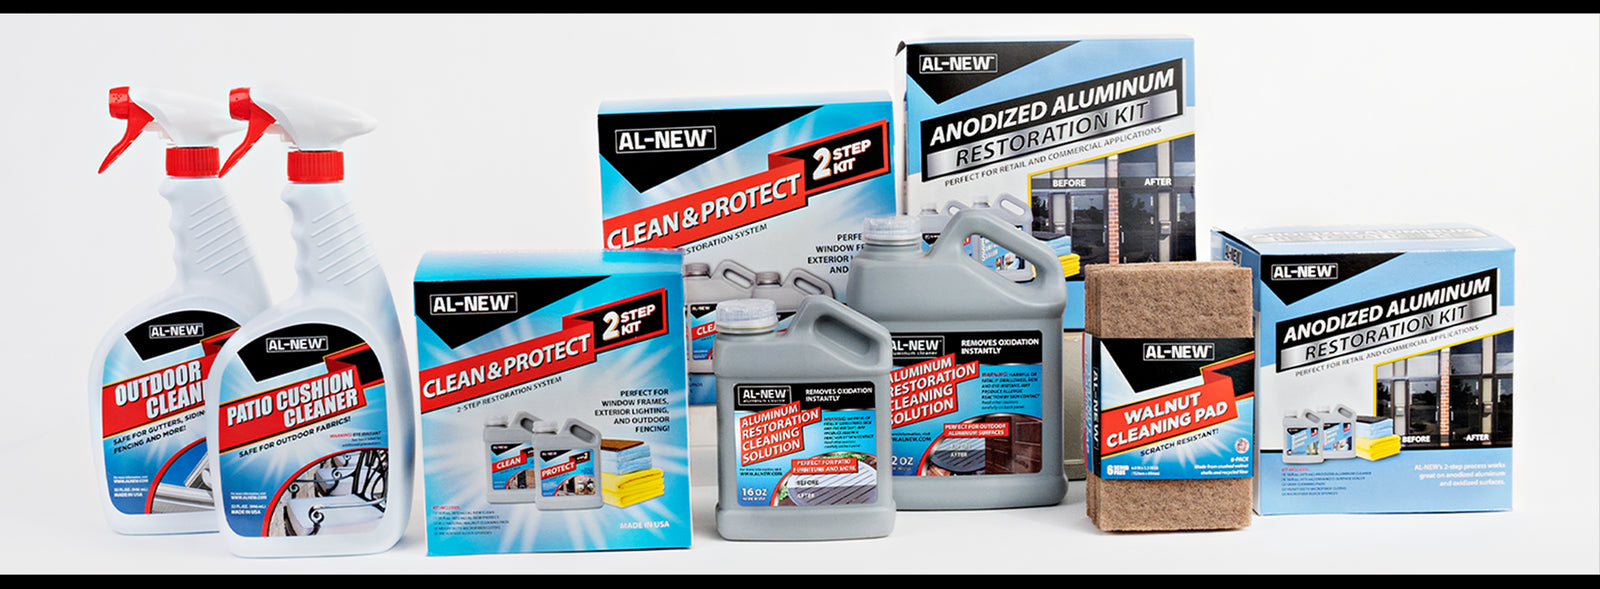 Anodized Aluminum Cleaner - AL-NEW